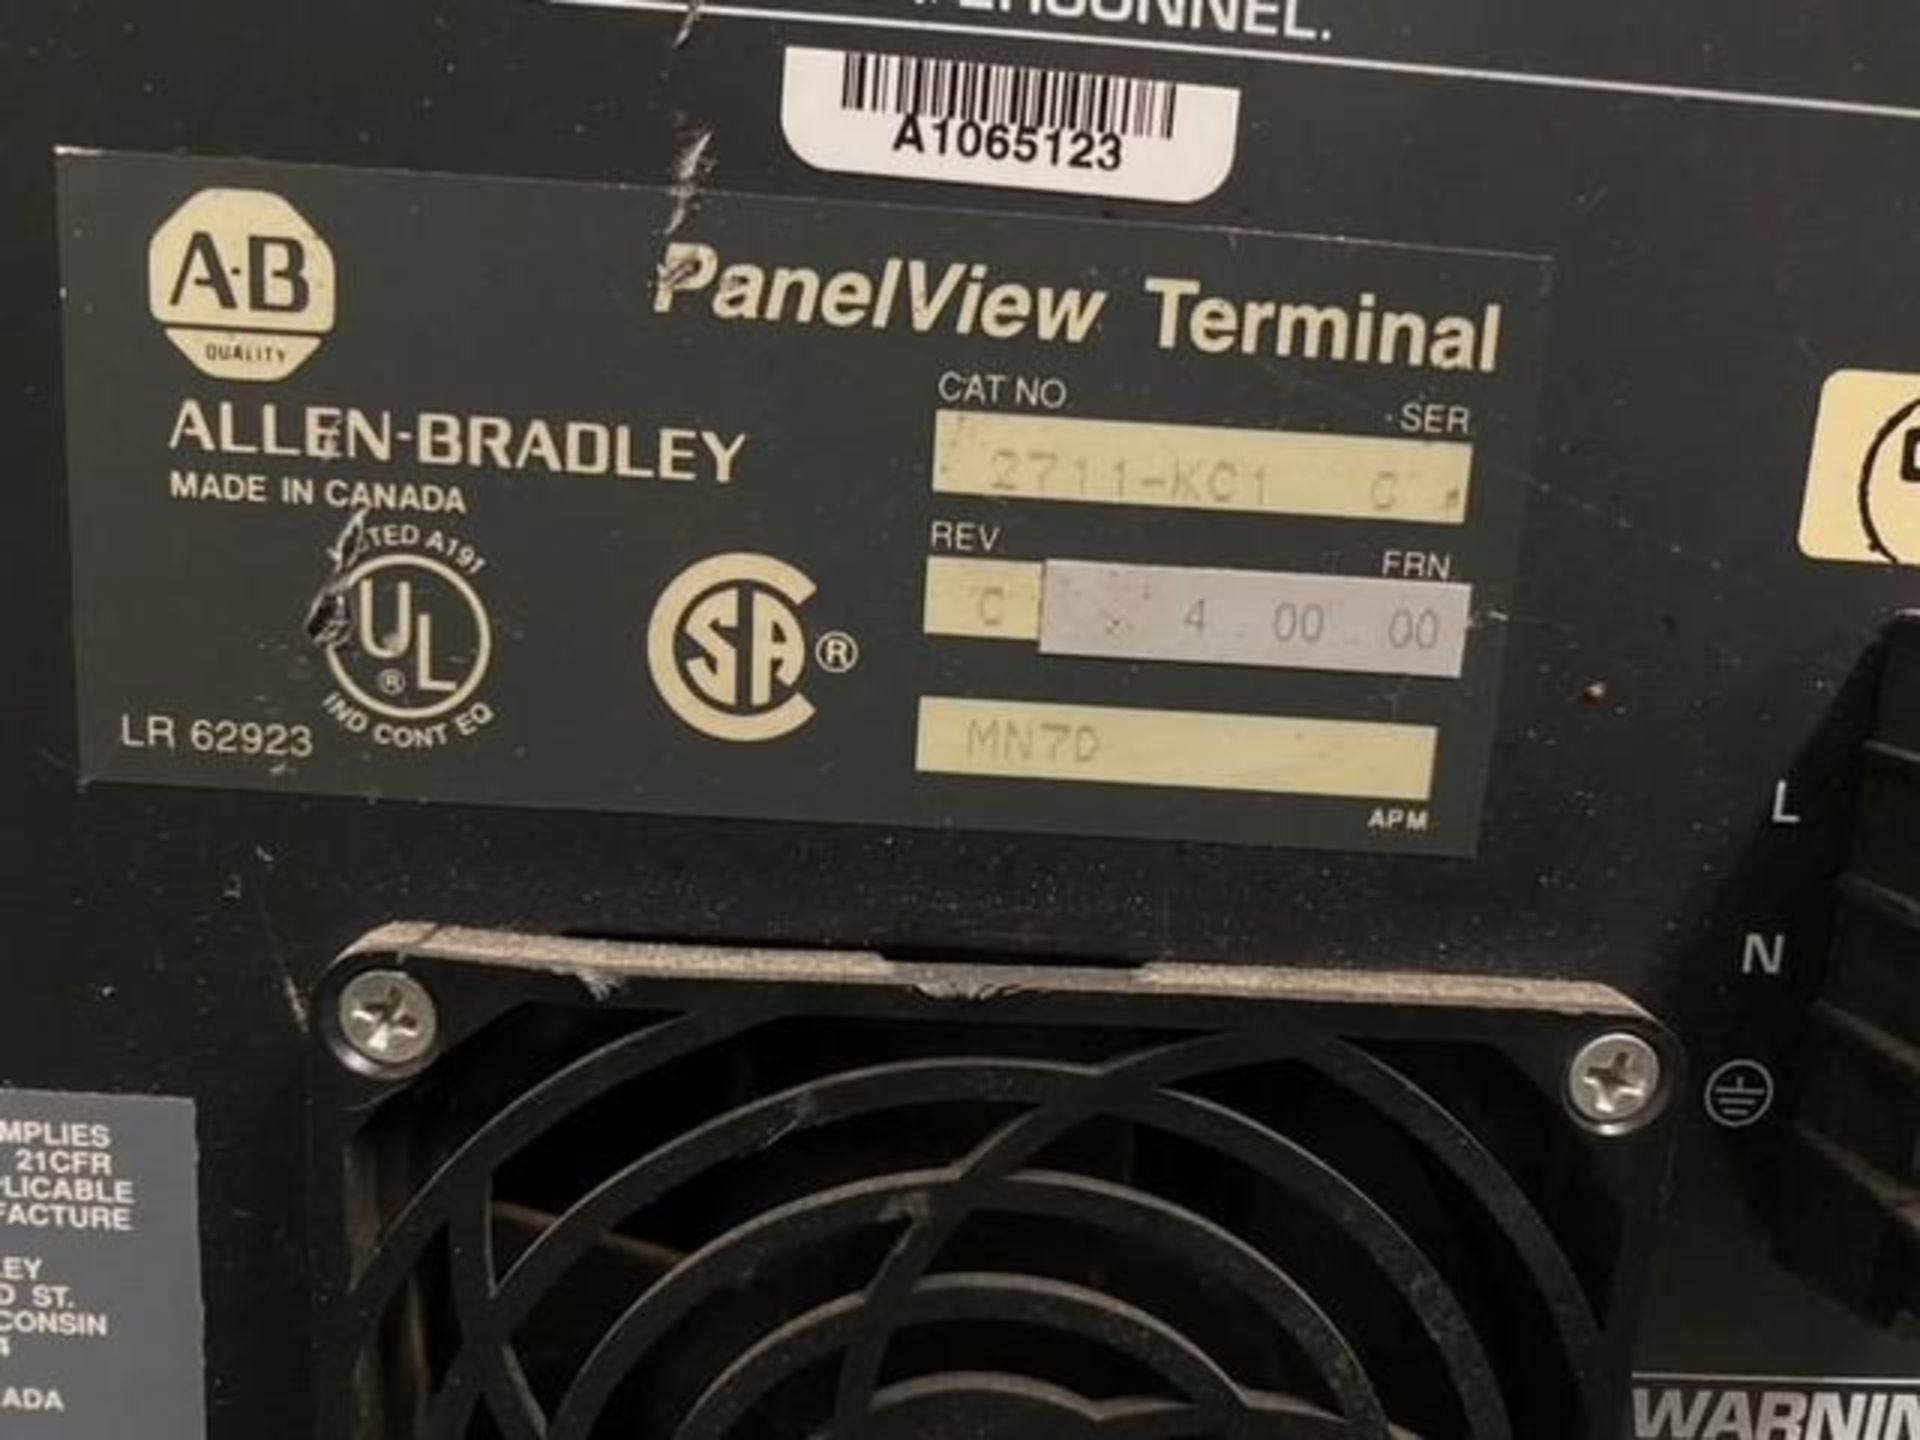 Allen Bradley Panel View Terminal - Image 2 of 2